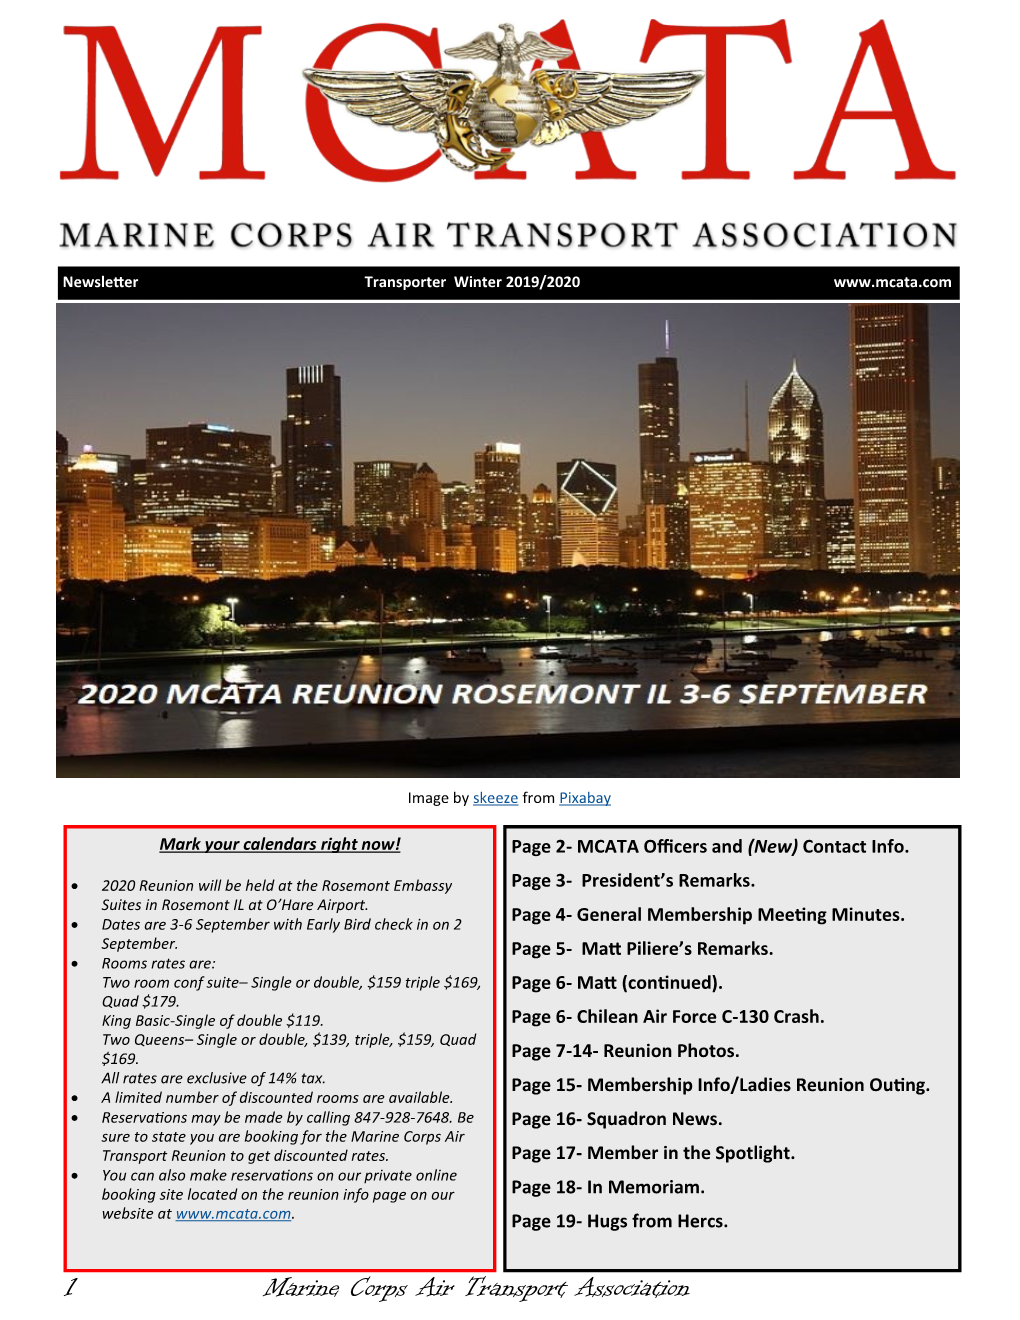 1 Marine Corps Air Transport Association